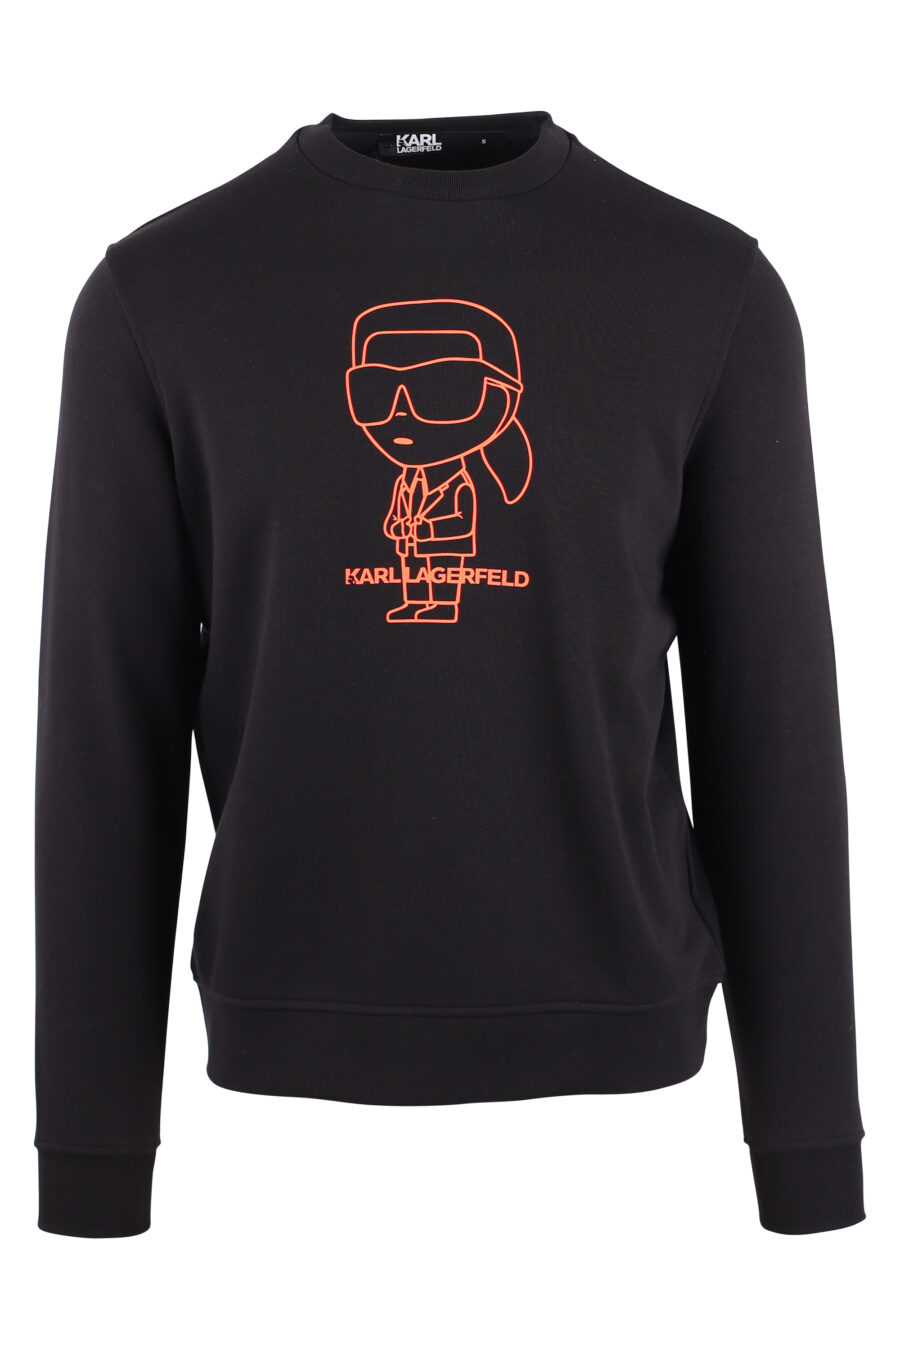 Black sweatshirt with "karl" maxilogo in orange silhouette - IMG 9439